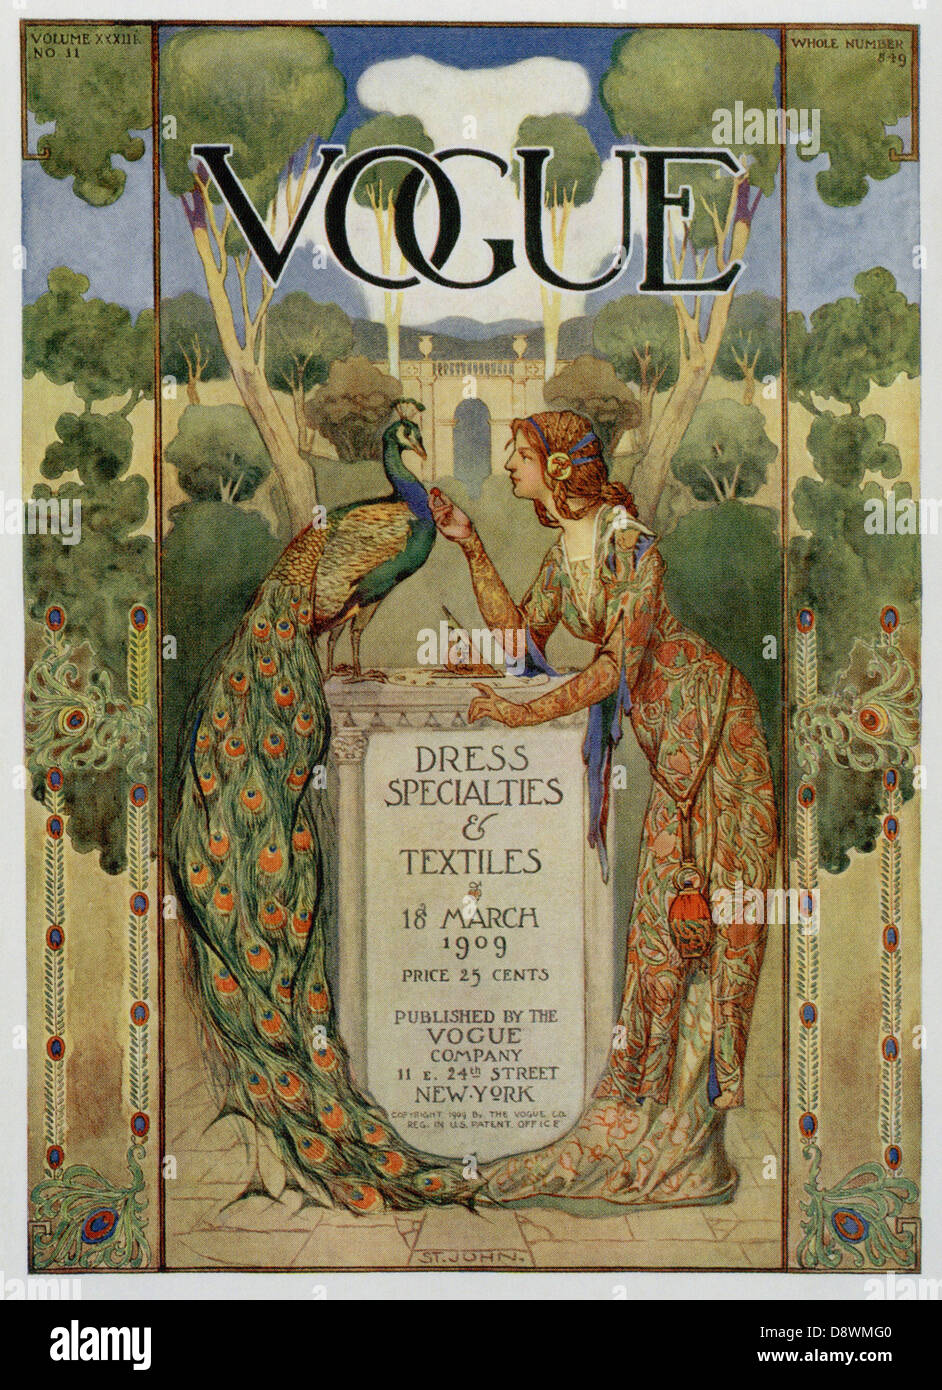 La historia de una revista de moda: Vogue